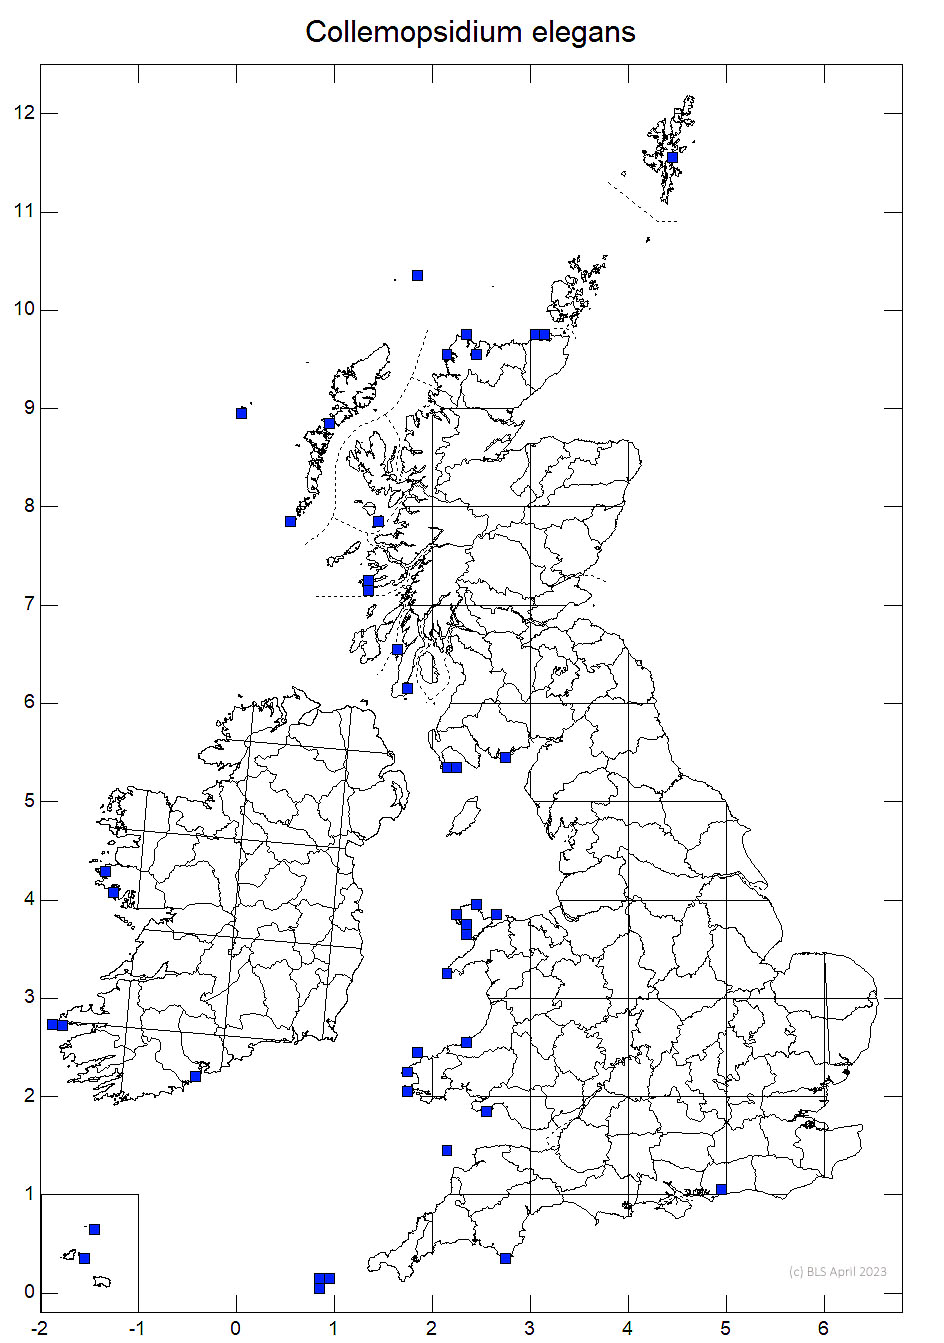 Collemopsidium elegans 10km sq distribution map